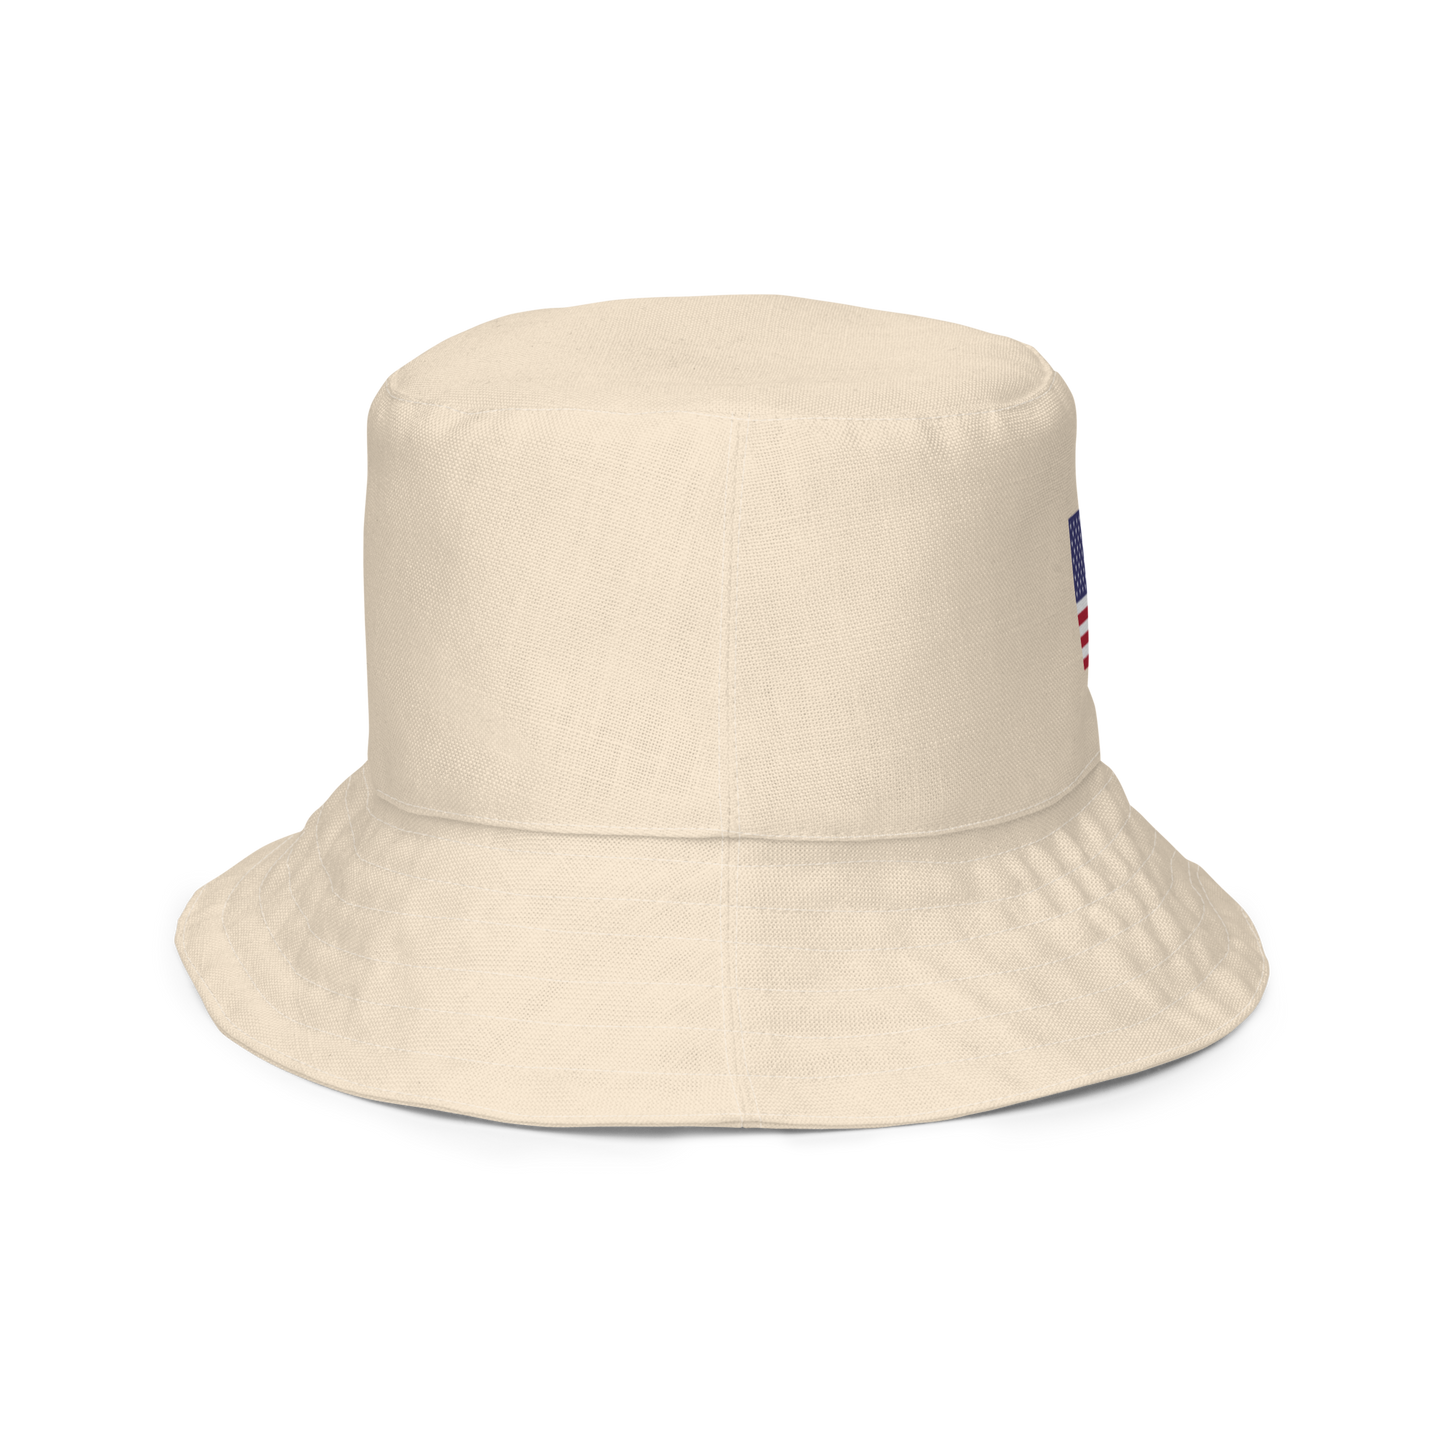 Michigan Upper Peninsula Bucket Hat (Patriot Edition) | Reversible - Champagne White